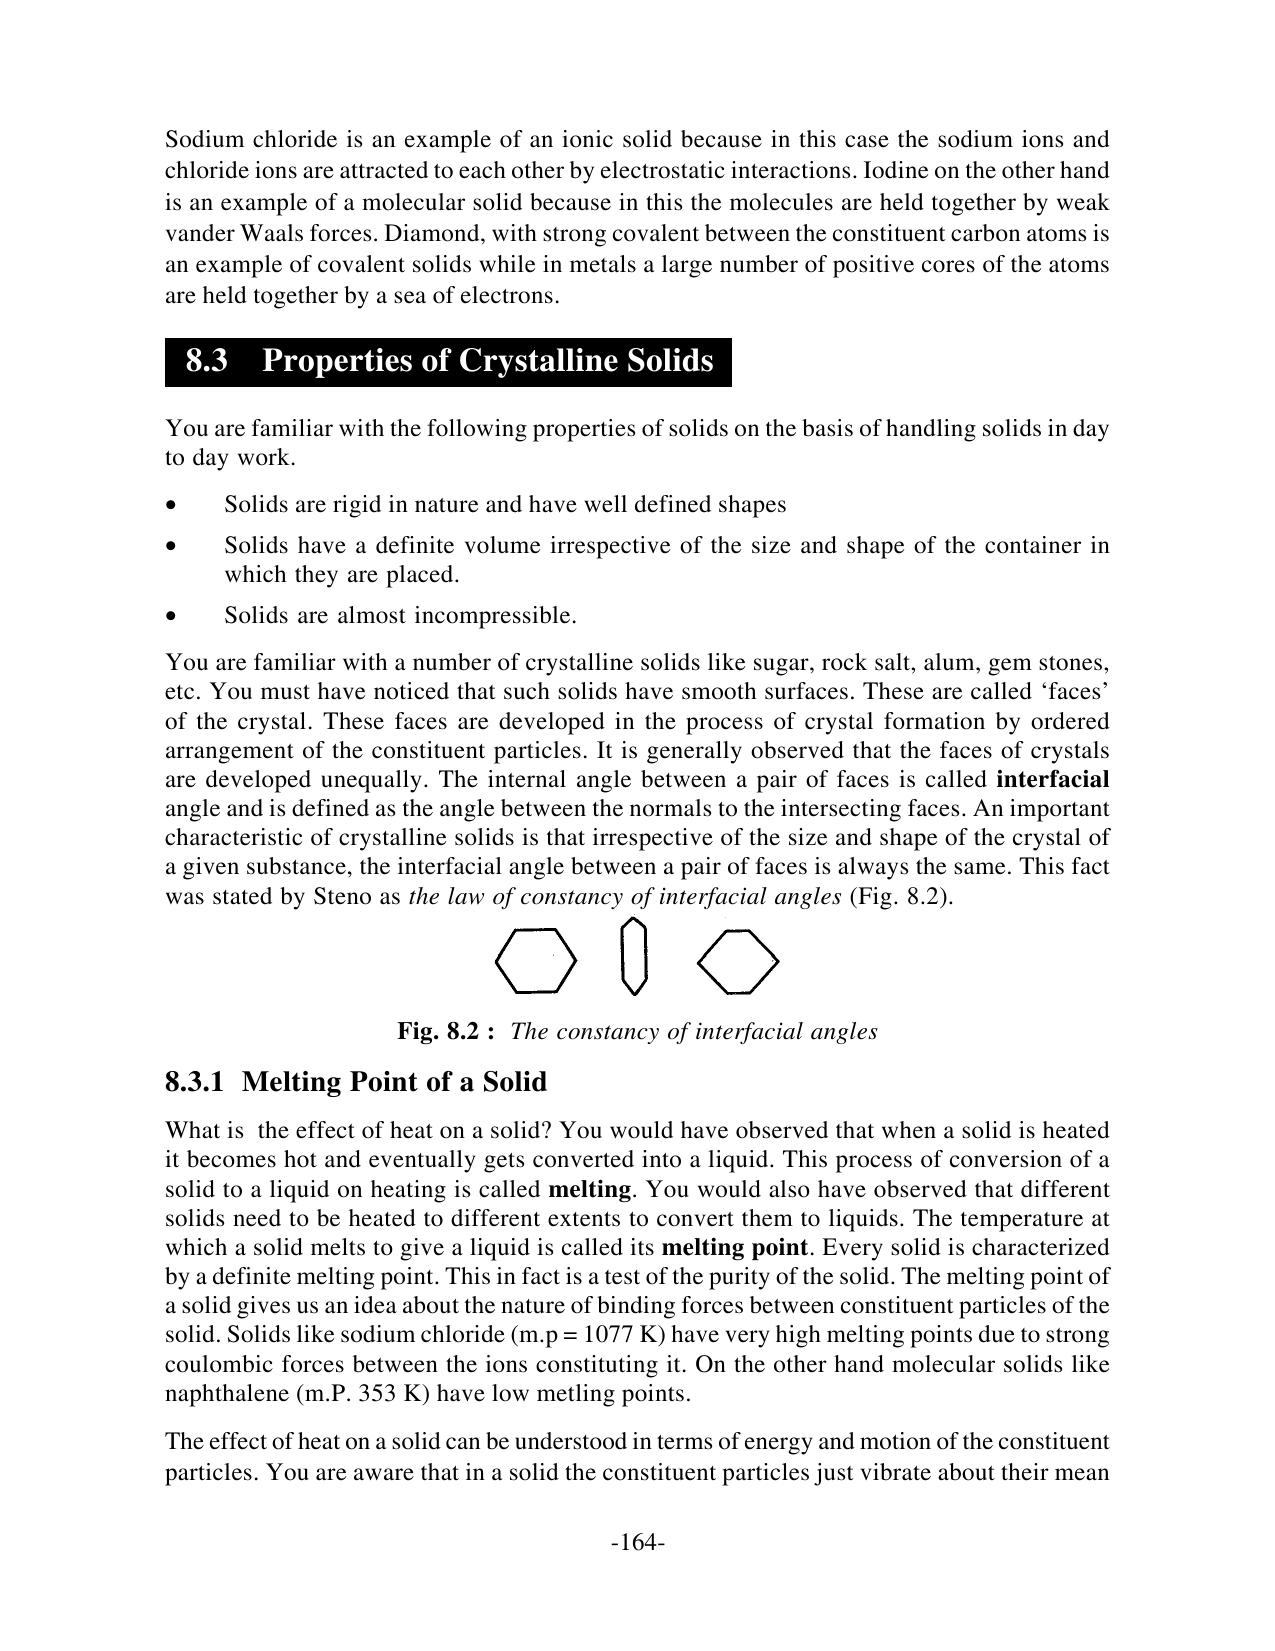 TS SCERT Inter 1st Year Chemistry Vol – I Path 1 (English Medium) Text Book - Page 173